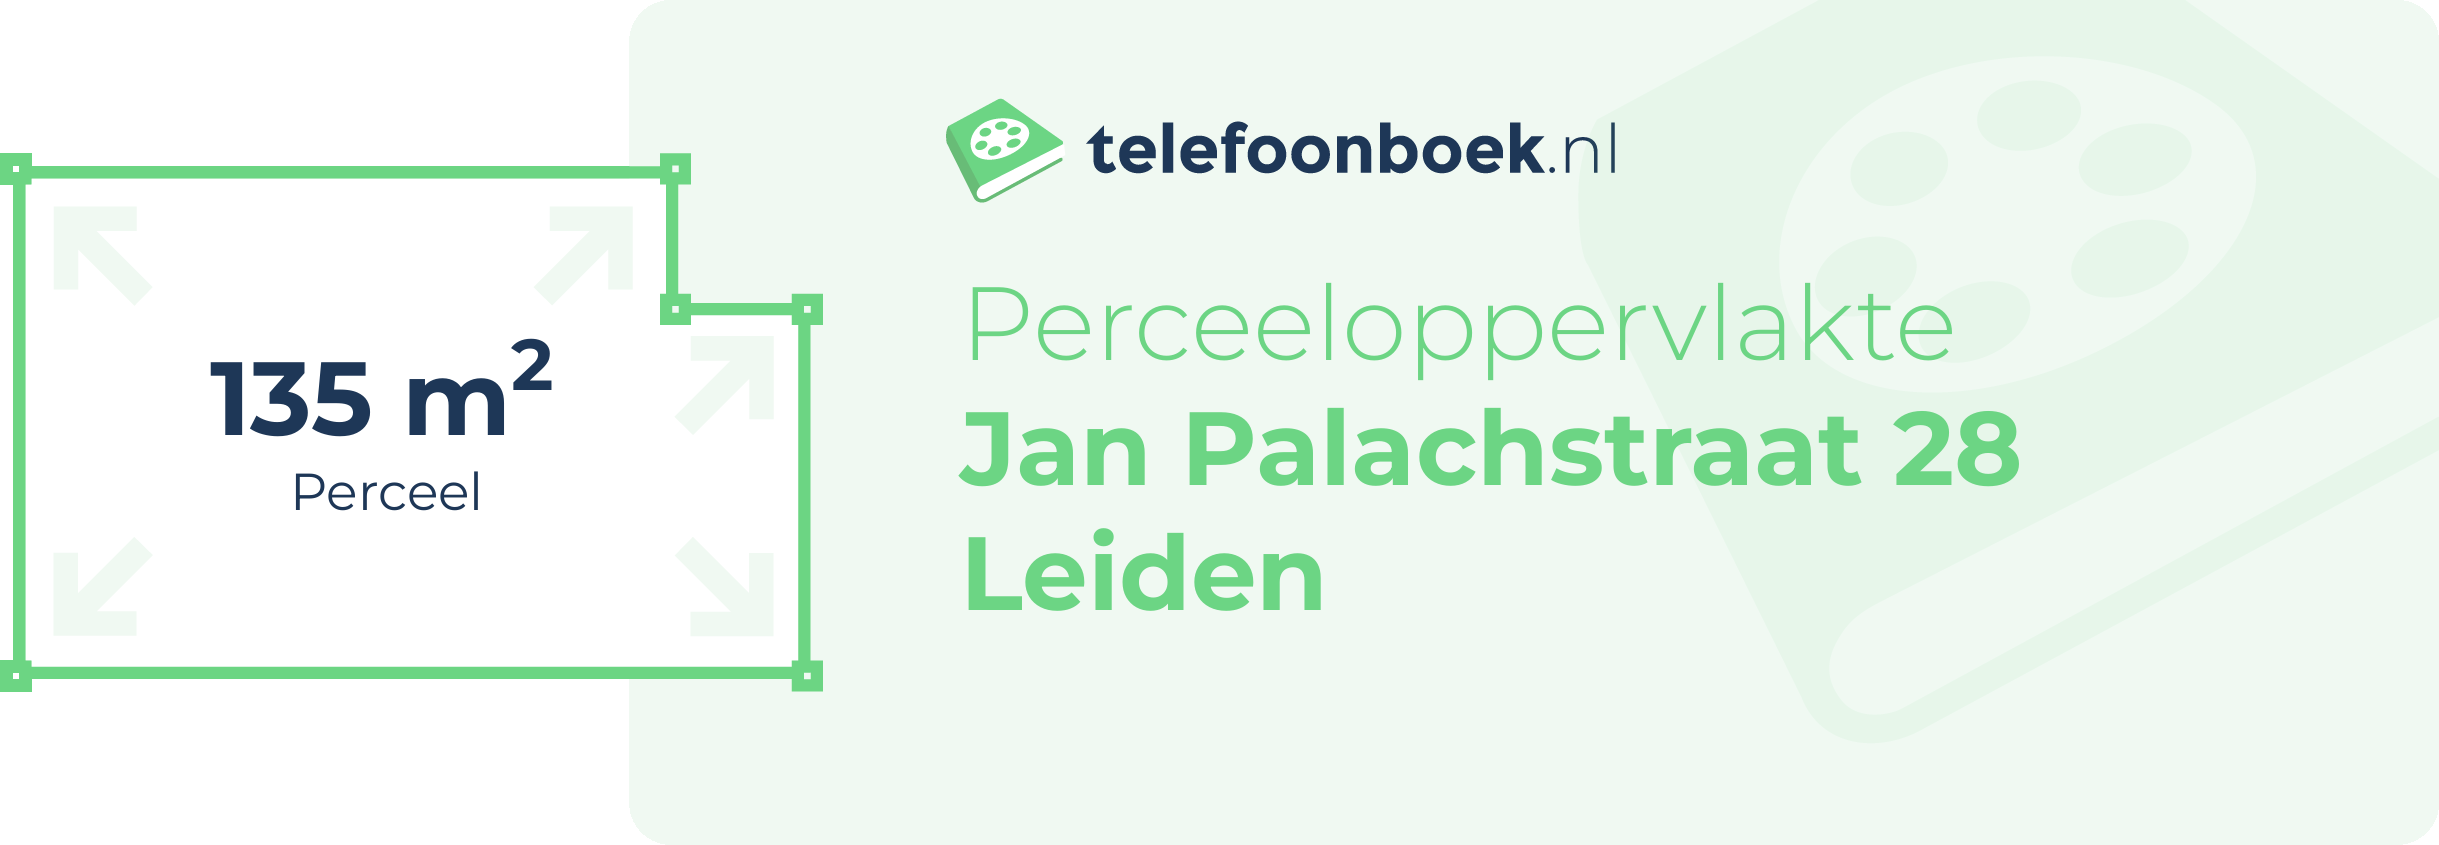 Perceeloppervlakte Jan Palachstraat 28 Leiden